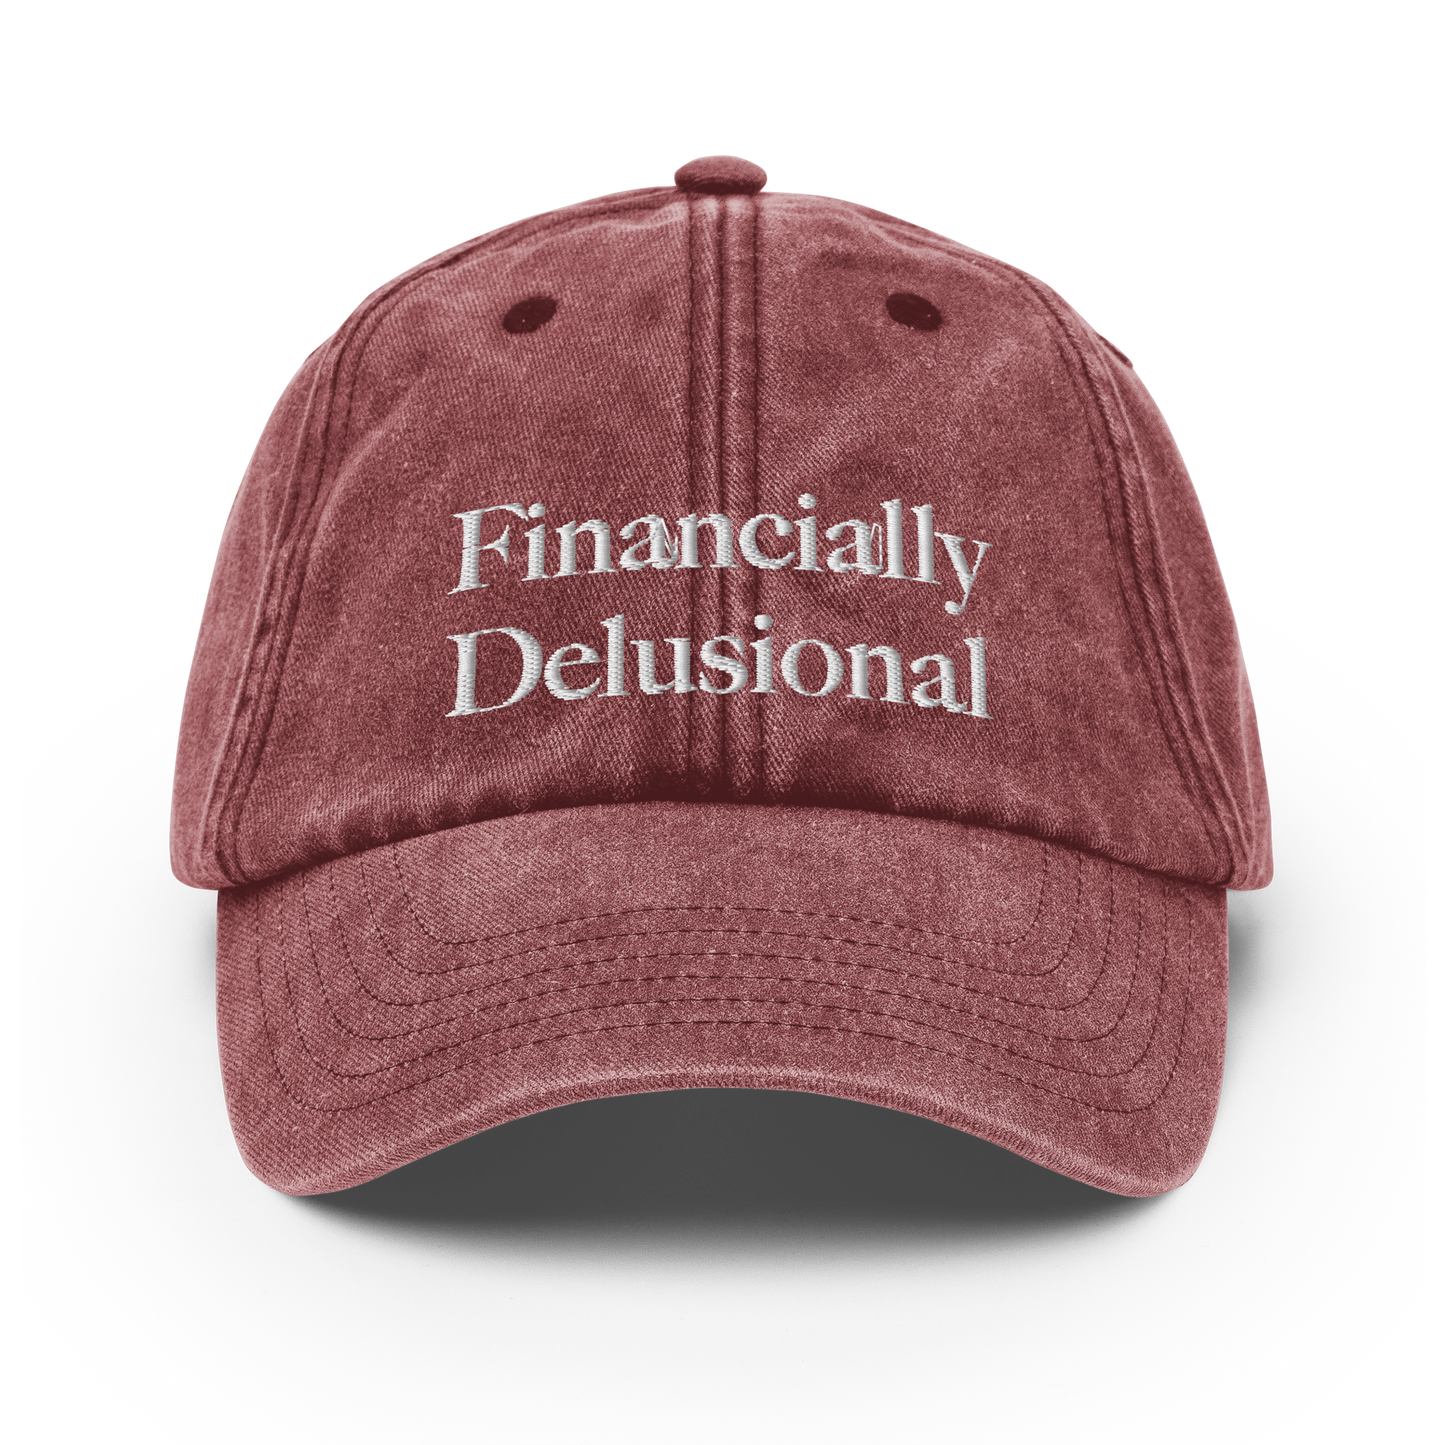 Financially Delusional - Vintage Cap